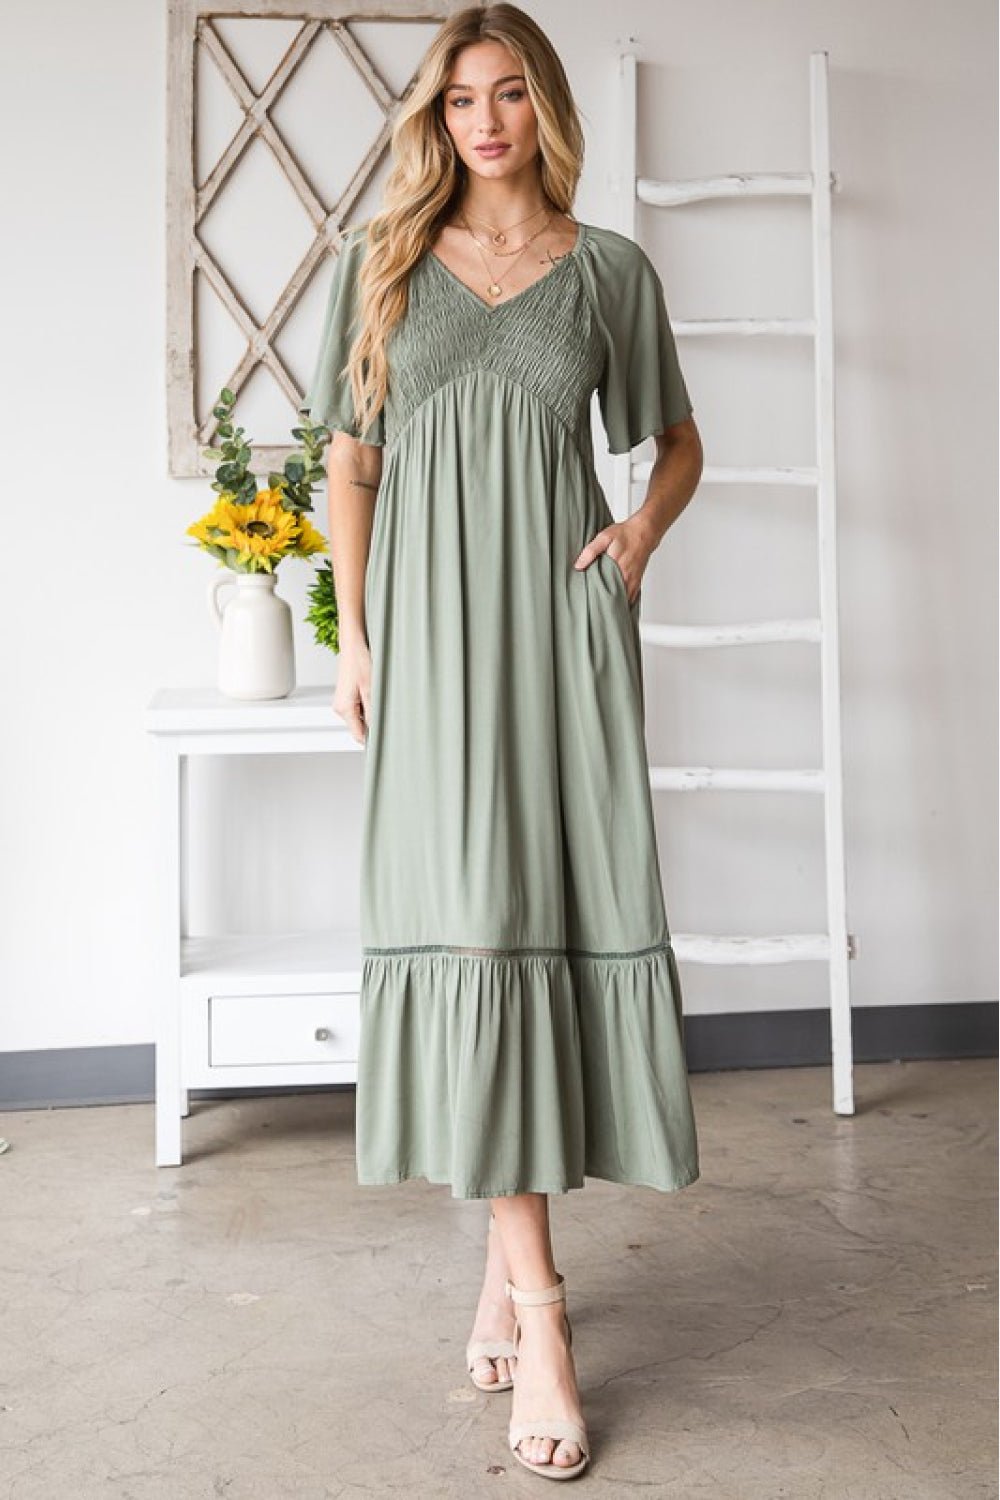 HEYSON Full Size Smocked Pocket Midi Dress in Sage - Fashion Girl Online Store